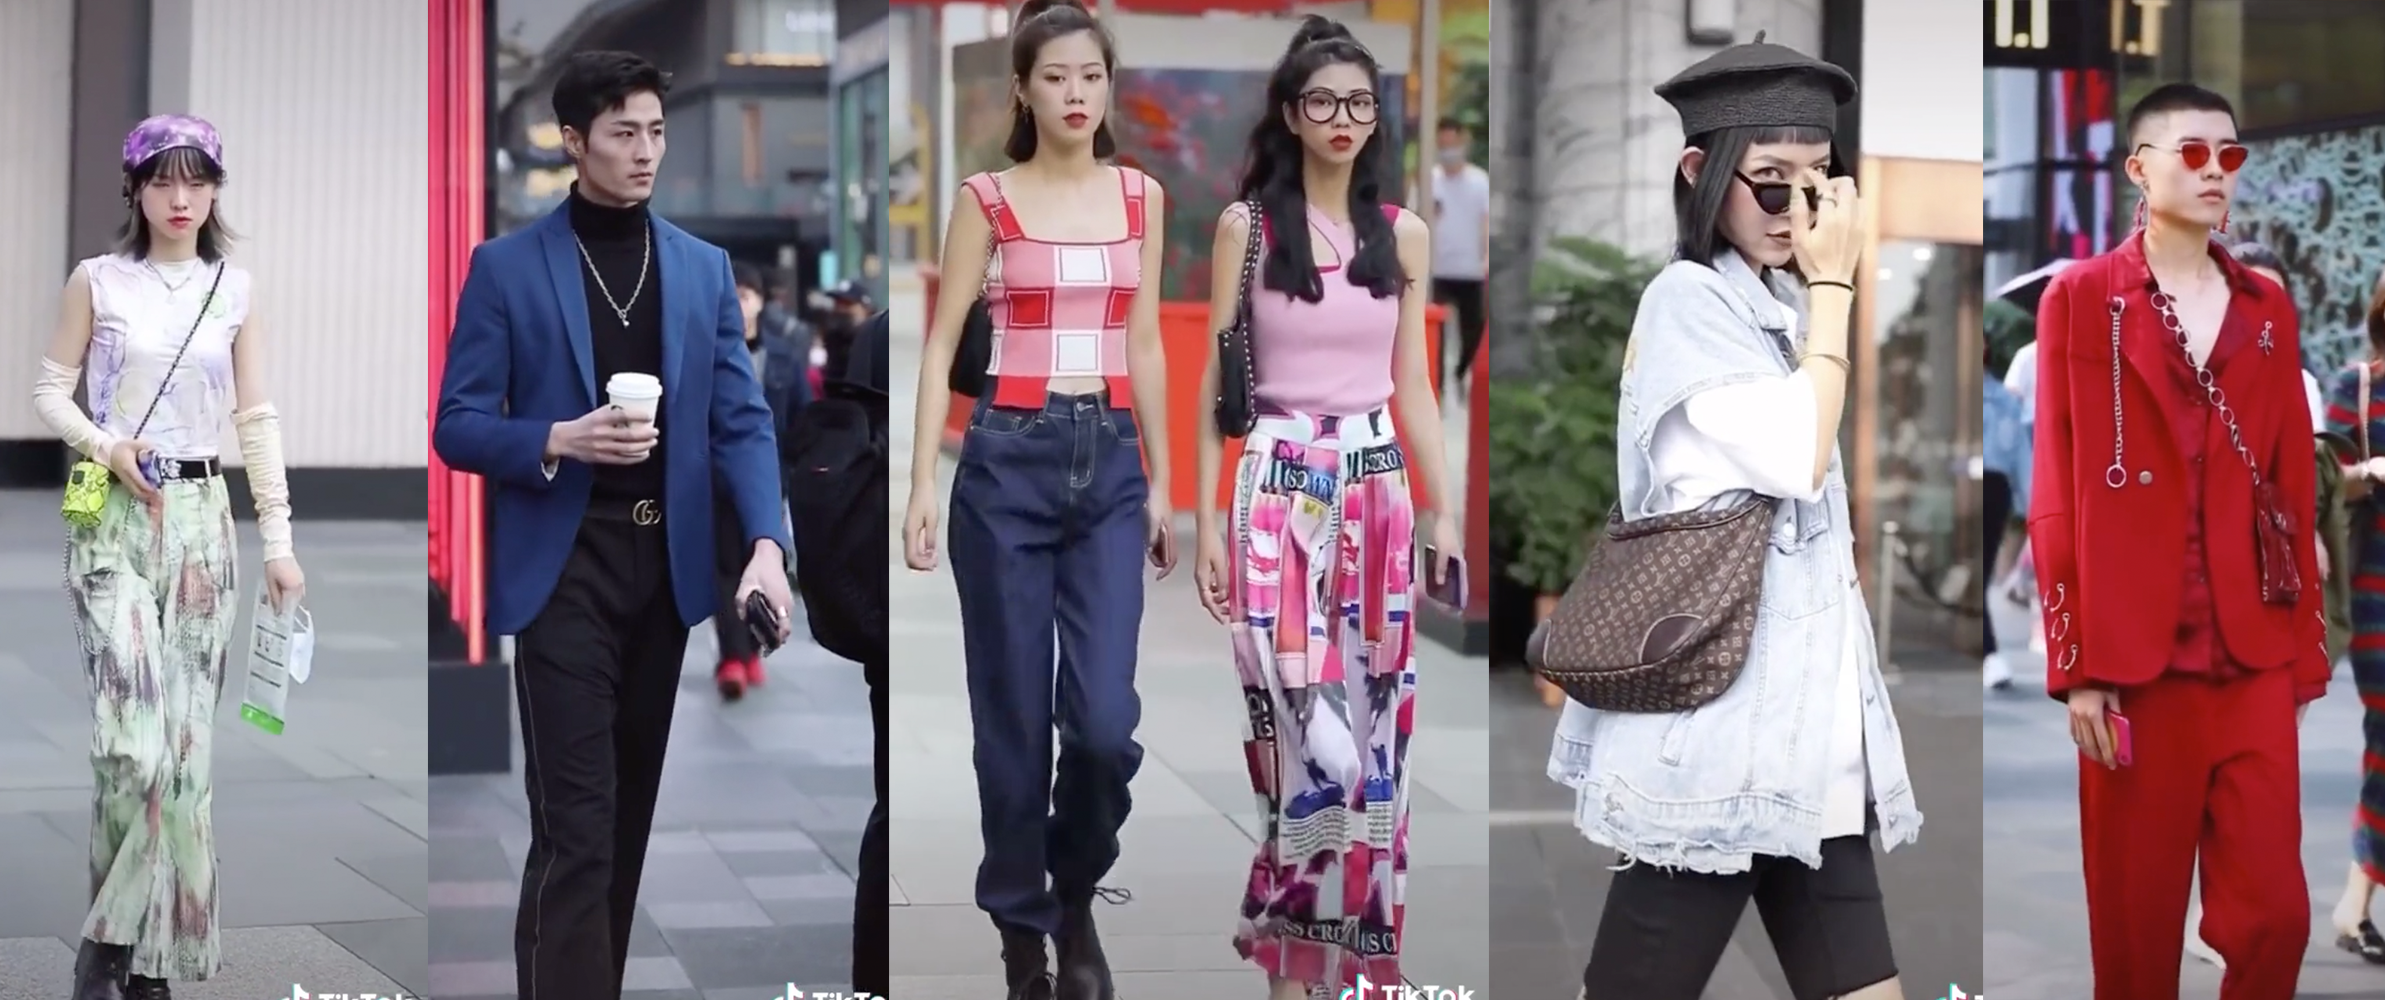 Chinese Street Fashion , tiktok chinese street fashion

